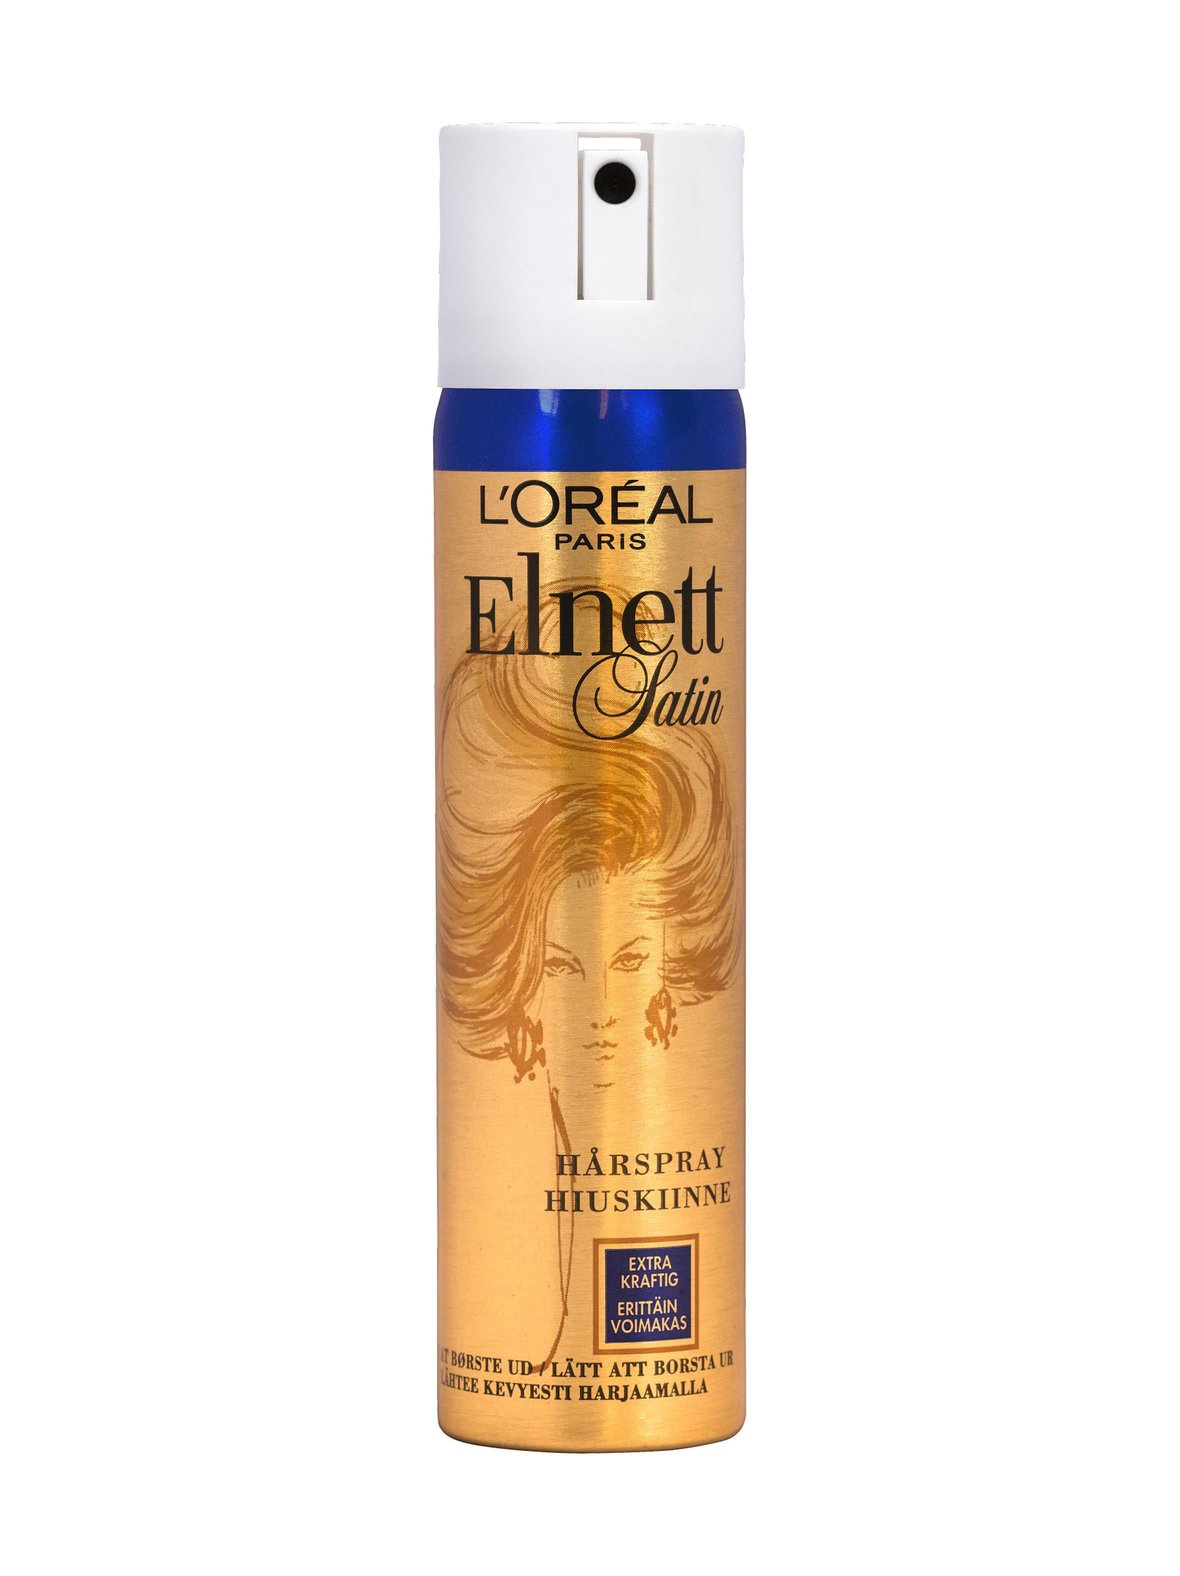 Elnett hairspray